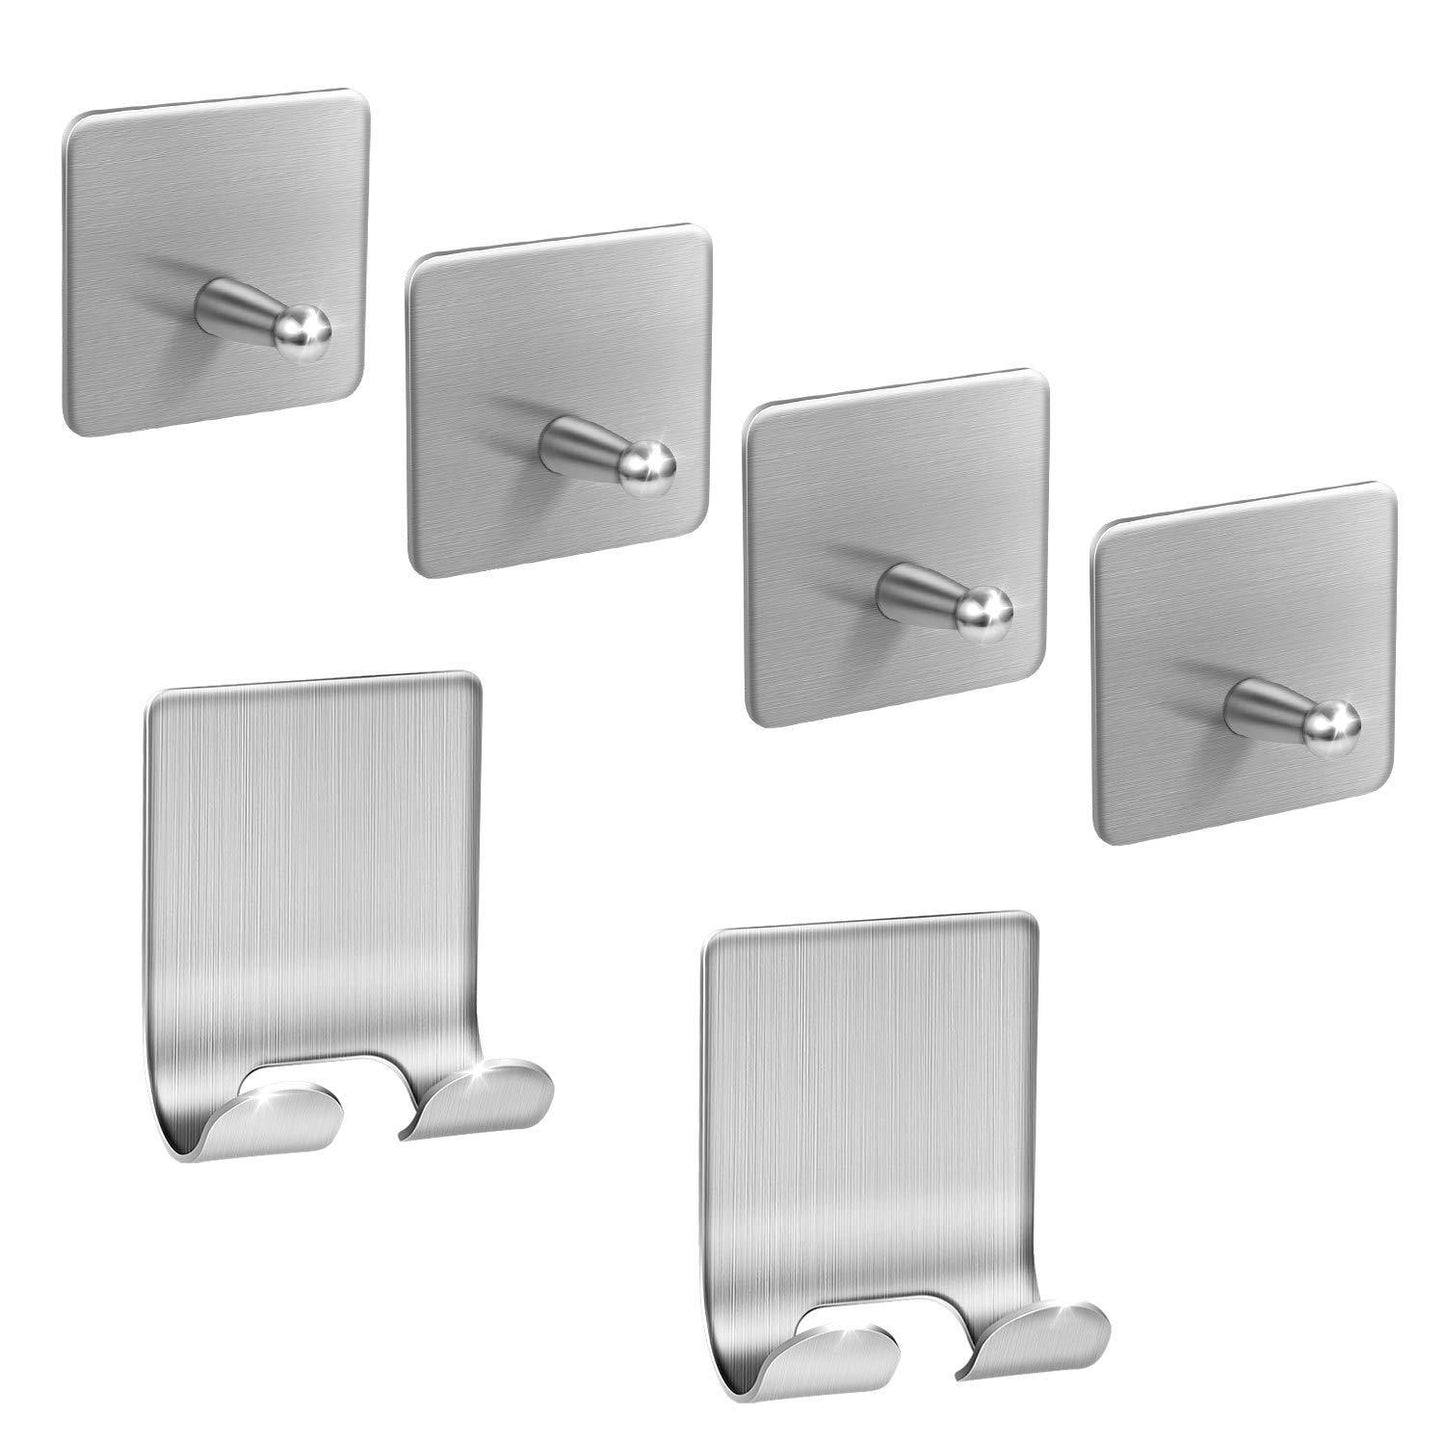 Buy now adhesive hooks stainless steel wall hooks hanger 4 key hooks and 2 plug holder hook double hooks for hanging kitchen bathroom office